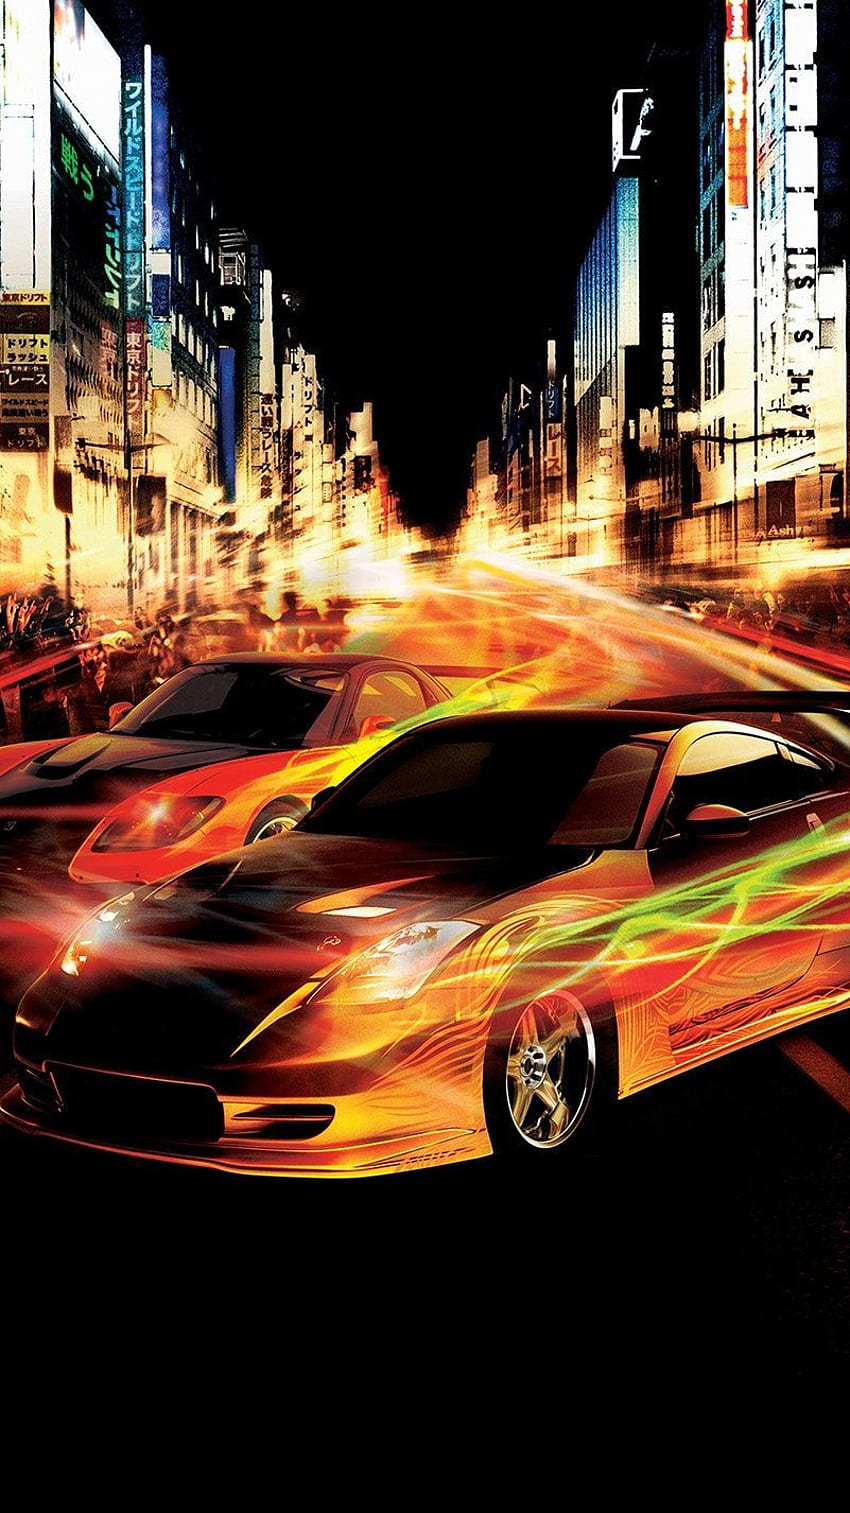 The Fast and the Furious: Tokyo Drift (2006) 電話 . 映画マニア。 ドリフト映画、東京ドリフトカー、ザ・フューリアス、ハン東京ドリフト HD電話の壁紙